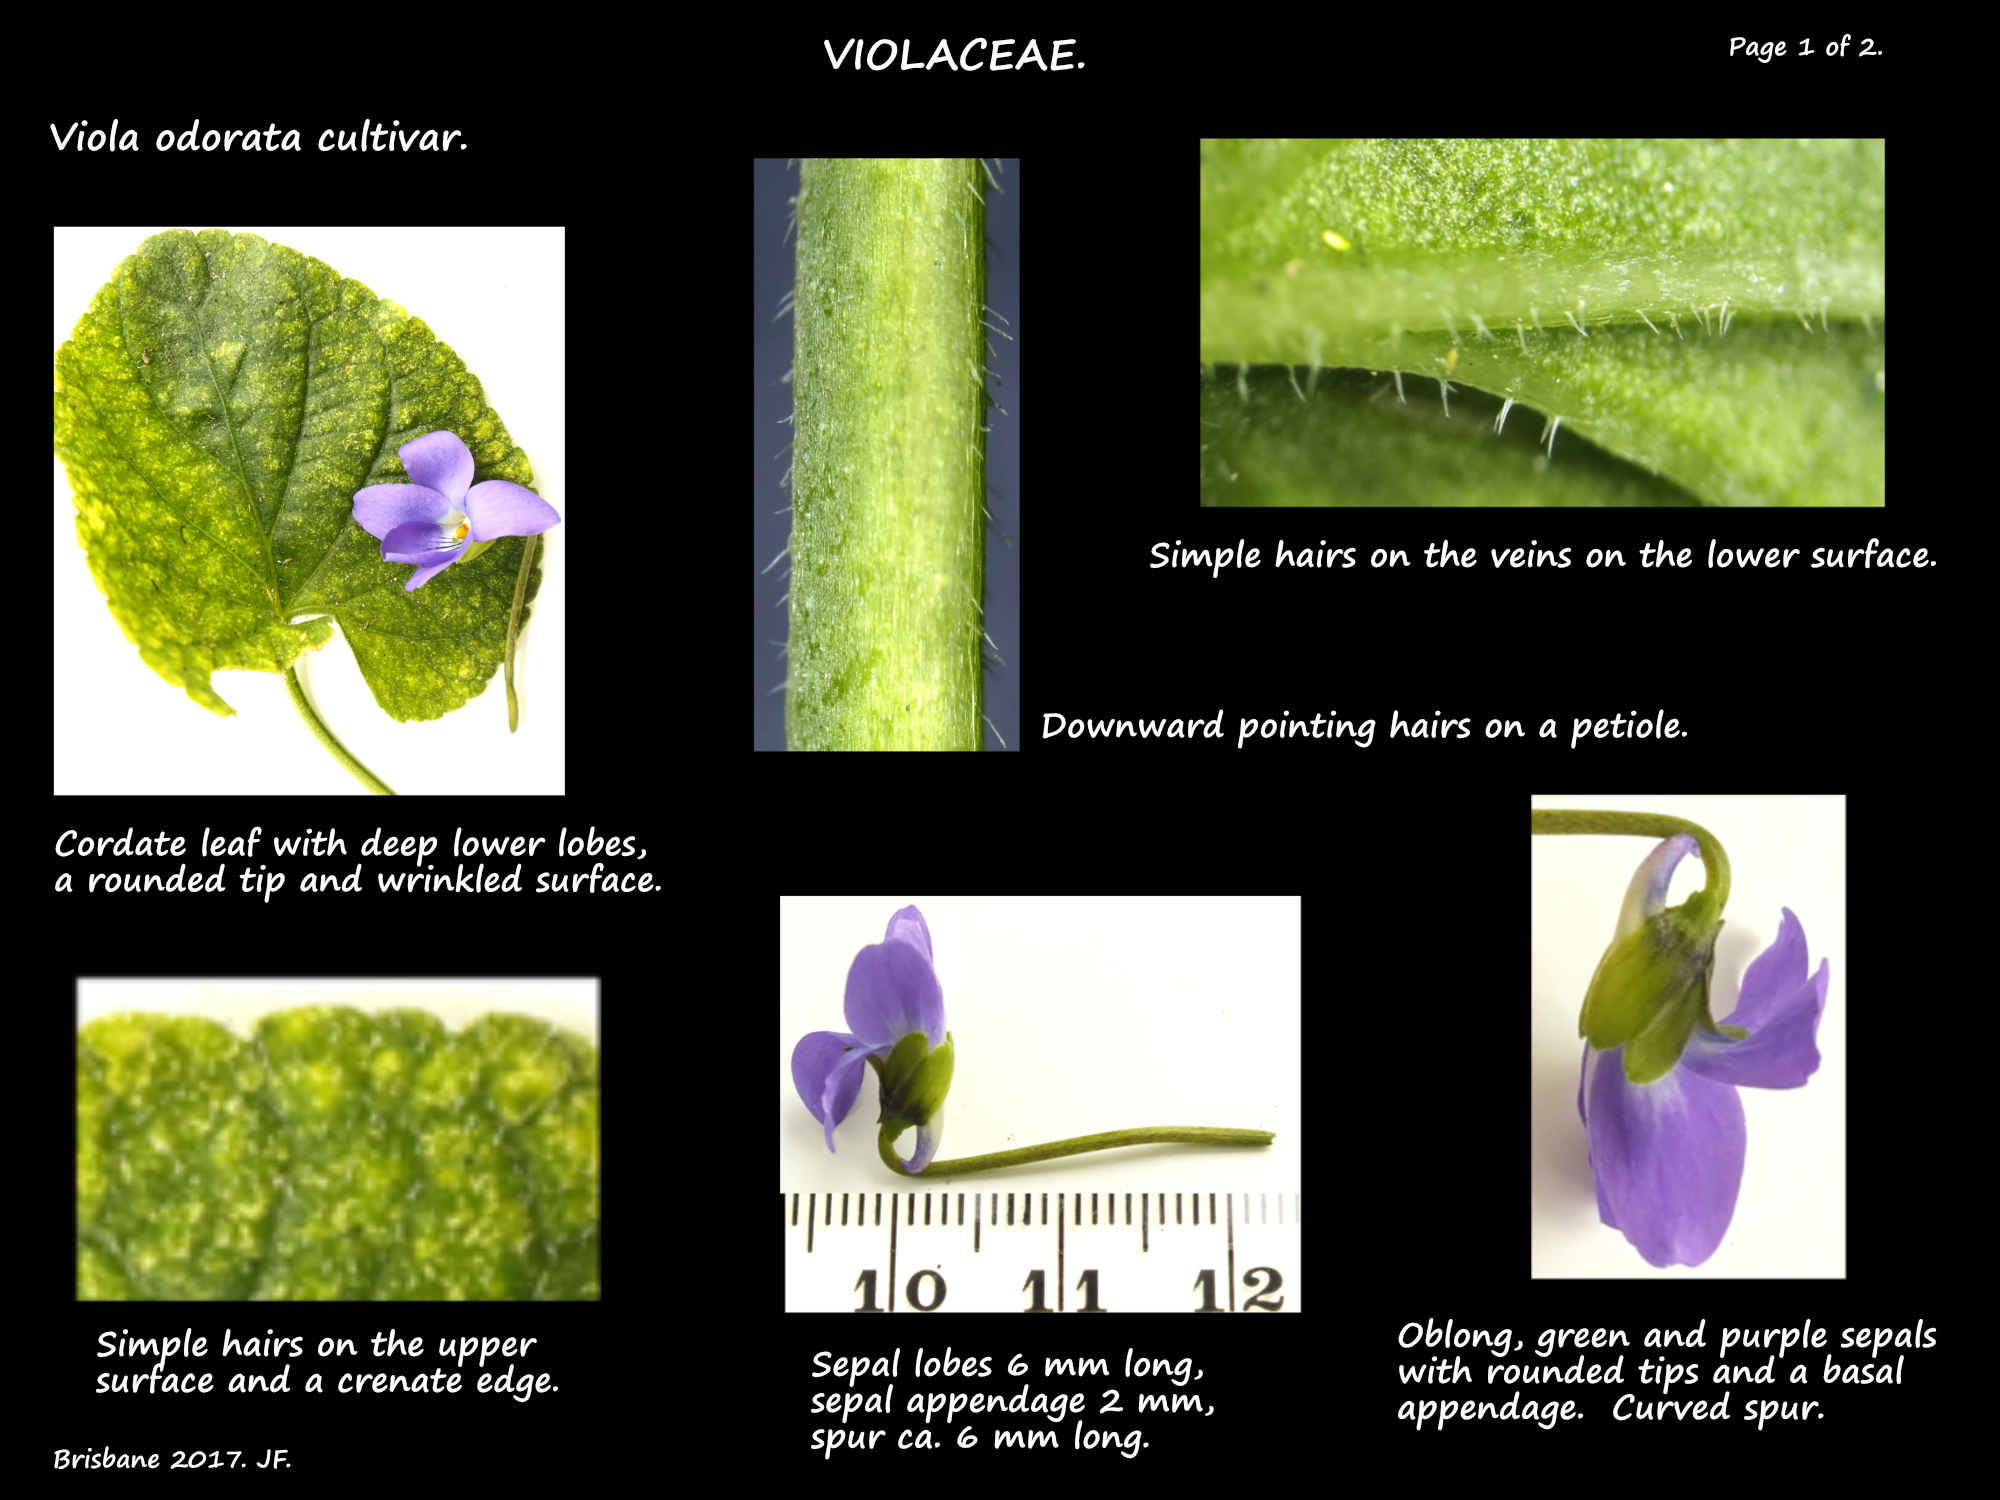 1a The leaves of a Viola odorata cultivar